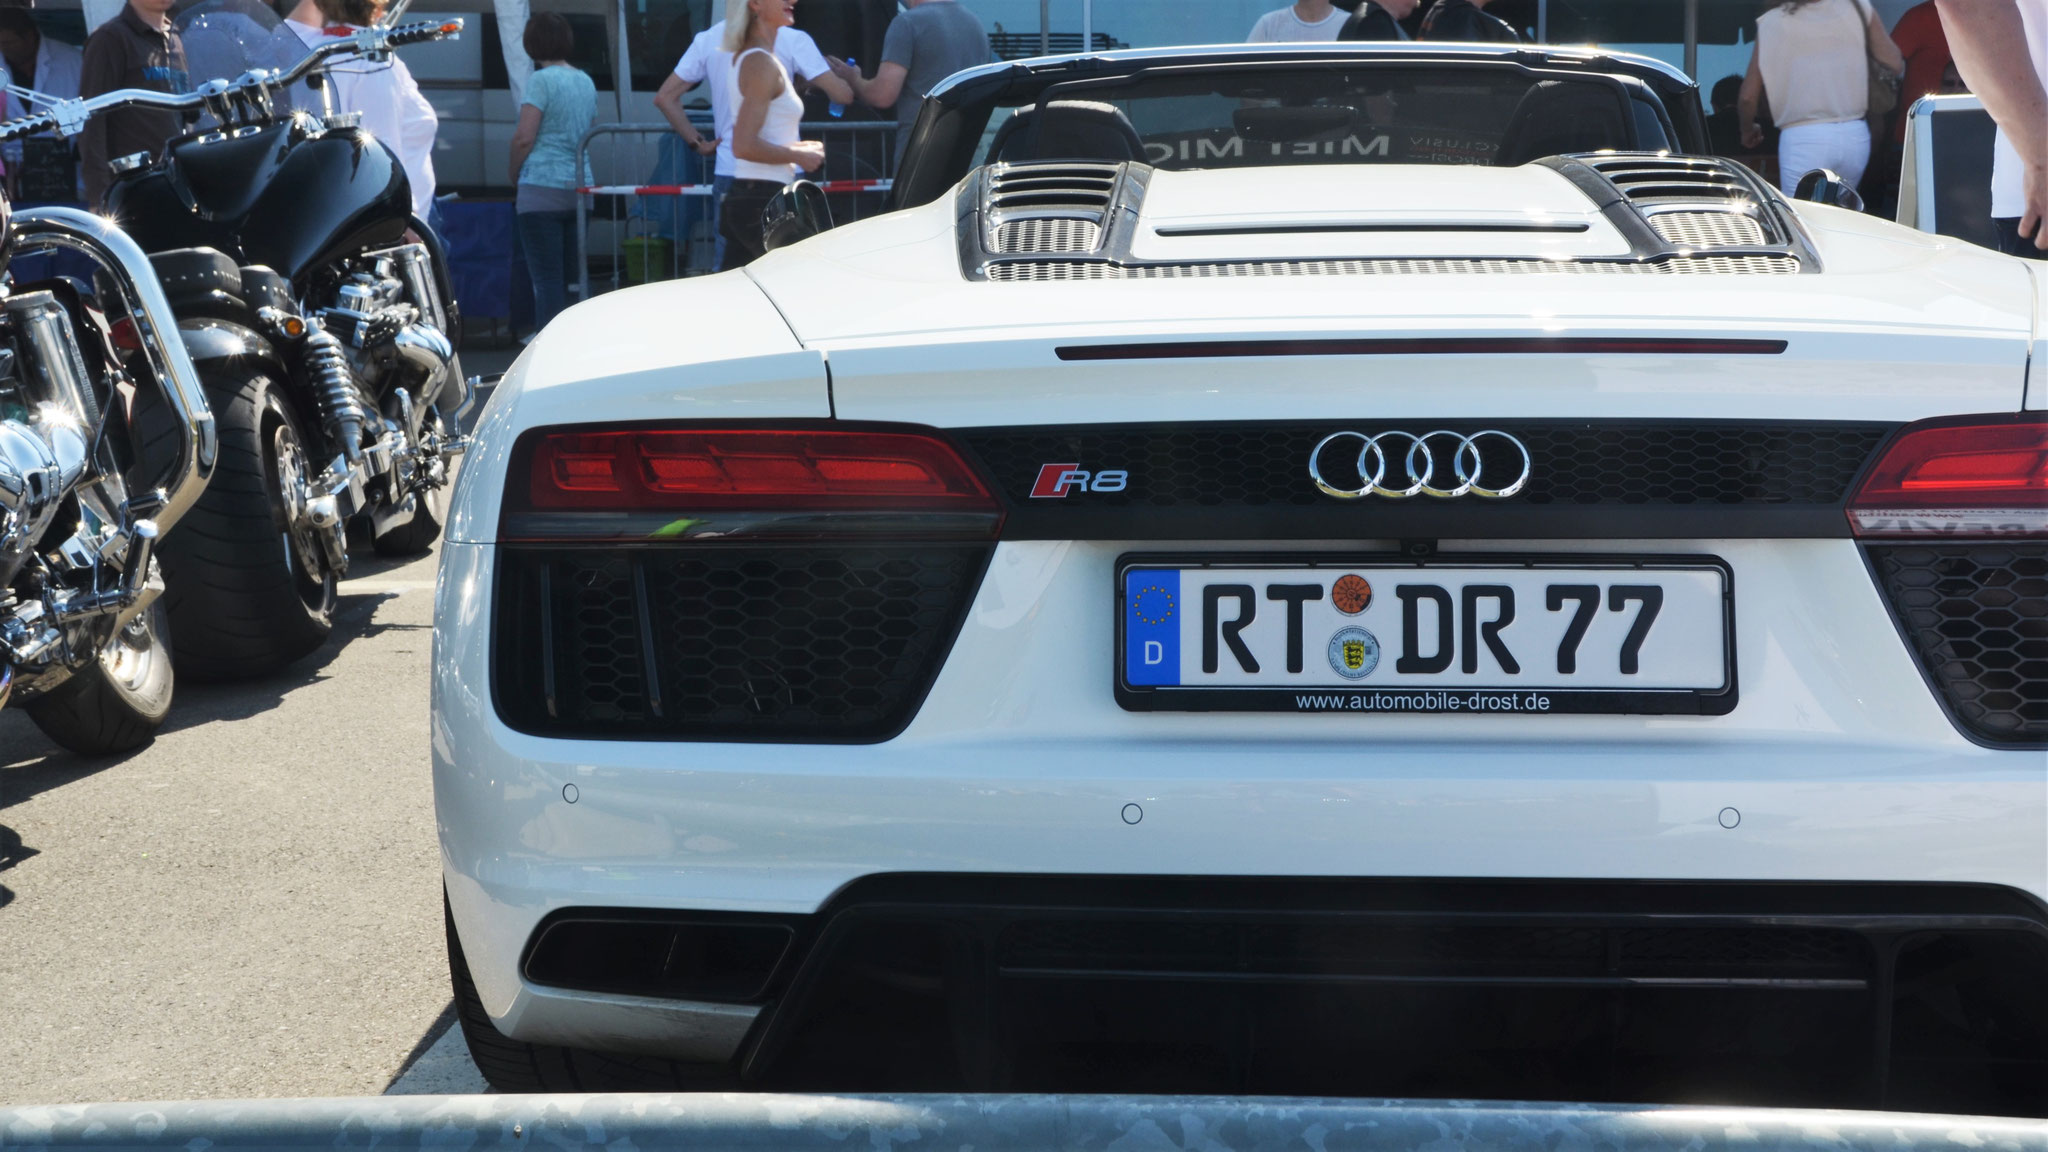 Audi R8 V10 Spyder - RT-DR77